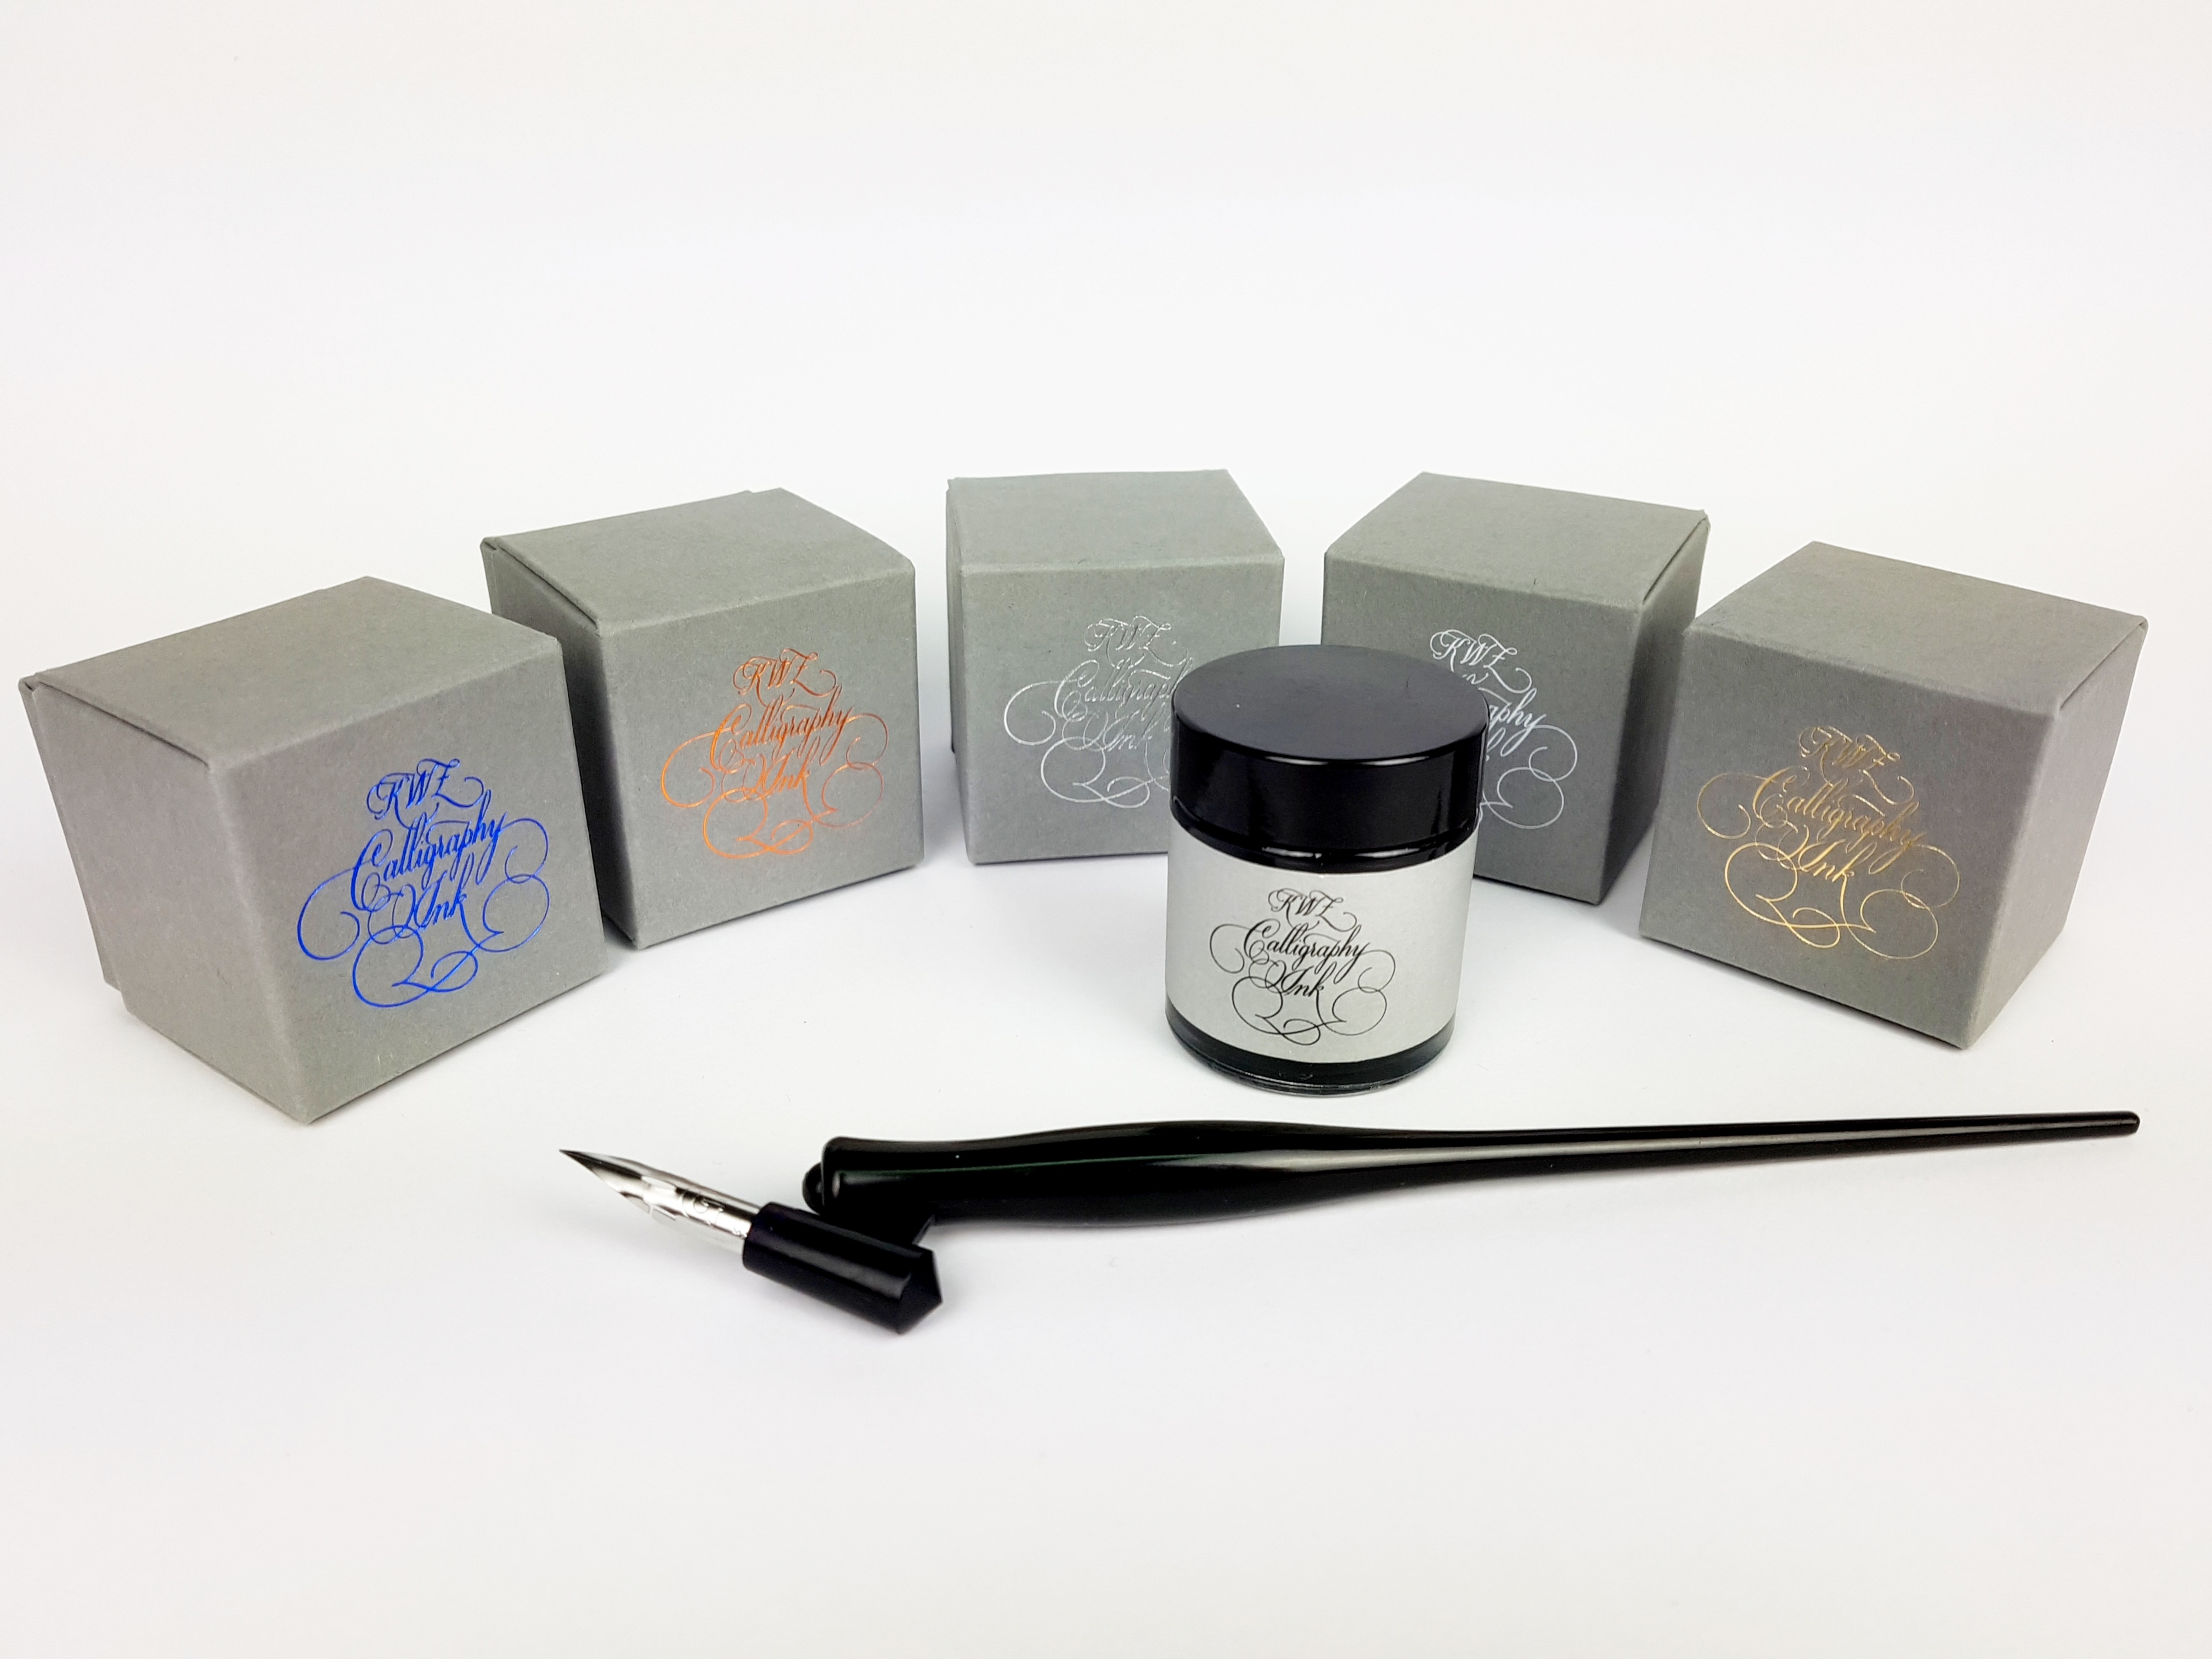 KWZ Calligraphy Ink Samples 2ml